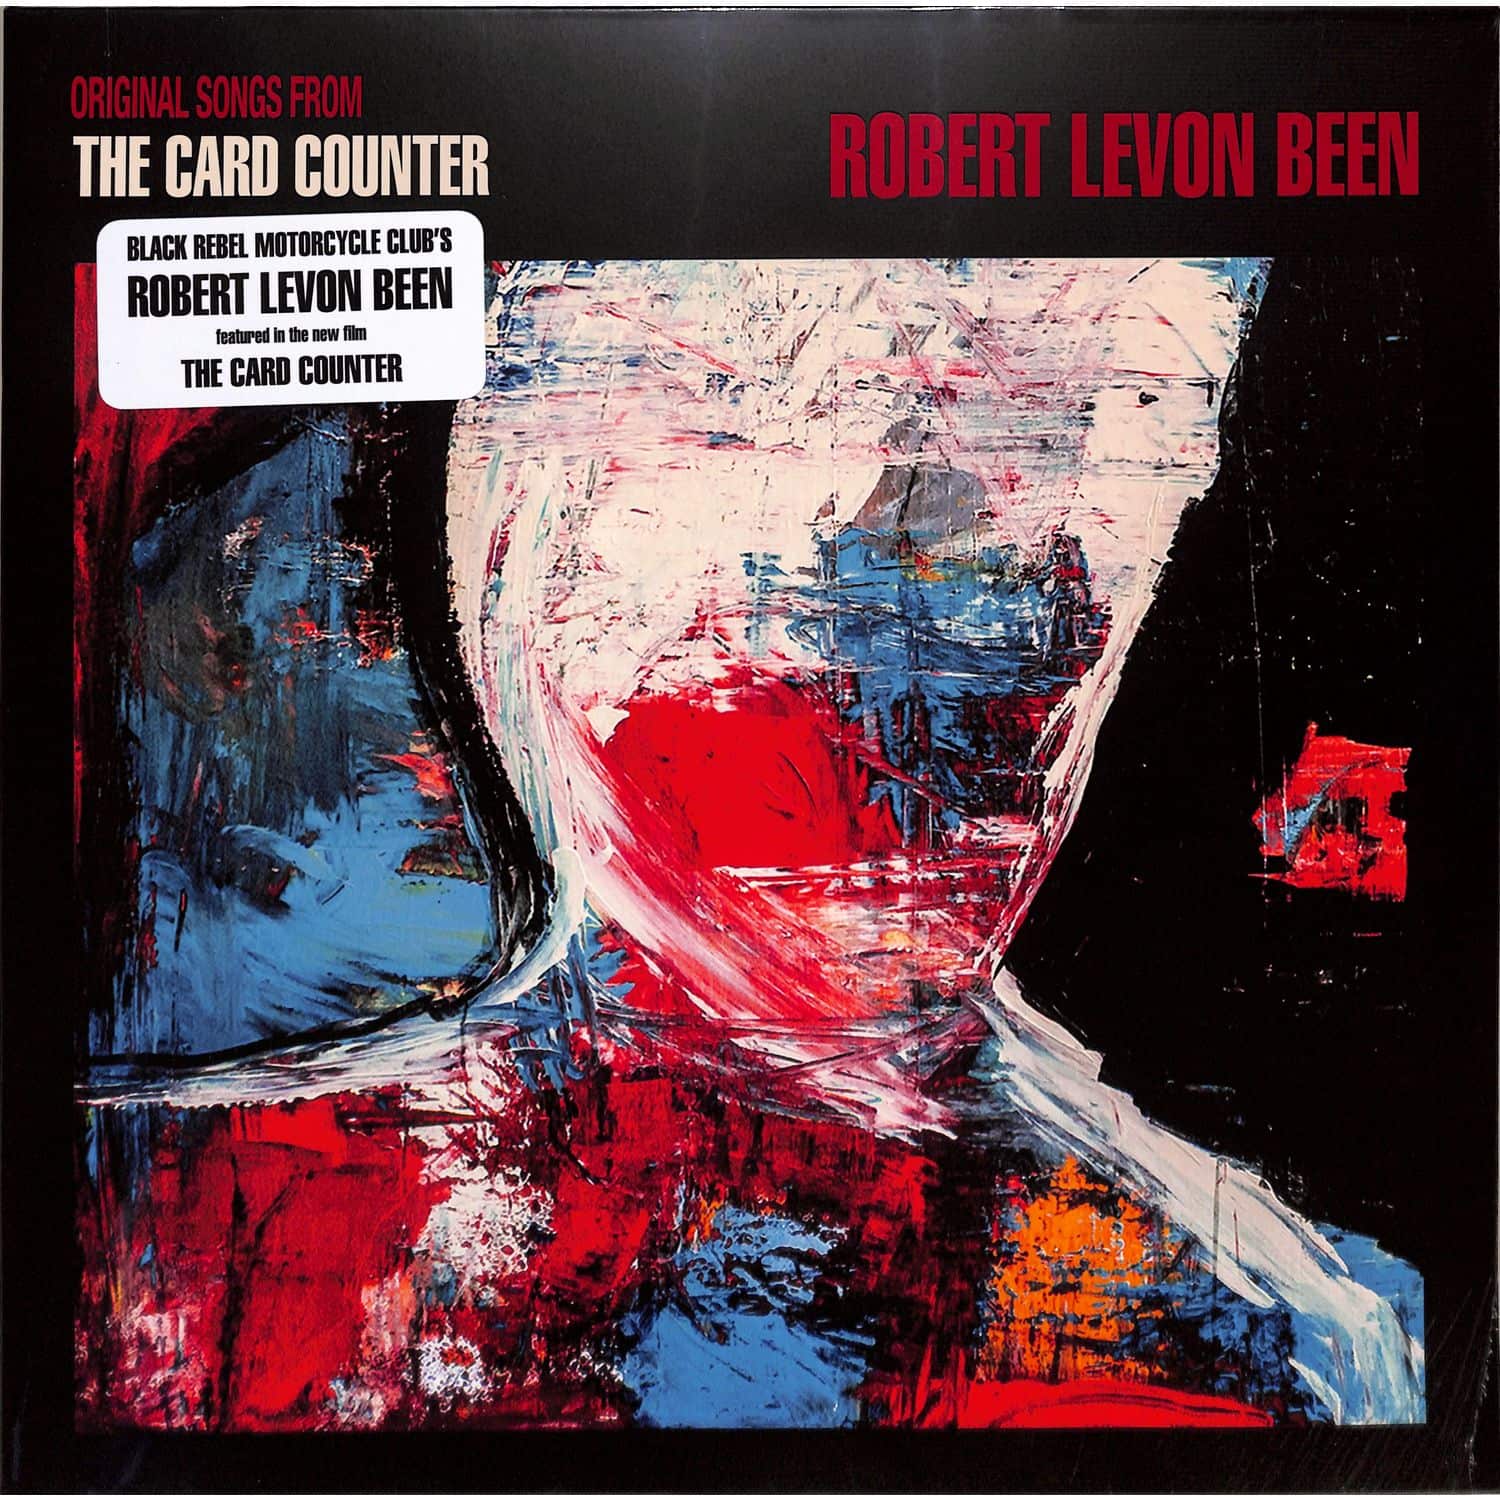 Robert Levon Been - ORIGINAL SONGS FROM THE CARD COUNTER